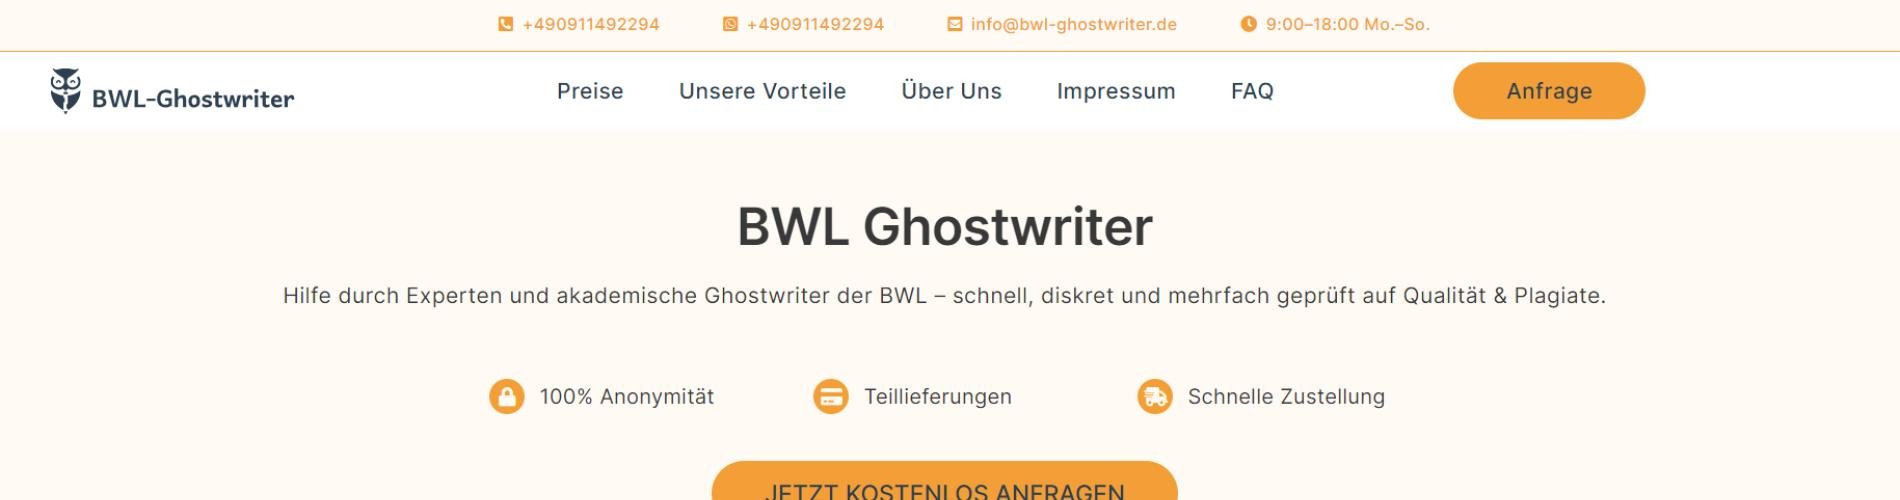 BWL Ghostwriter cover